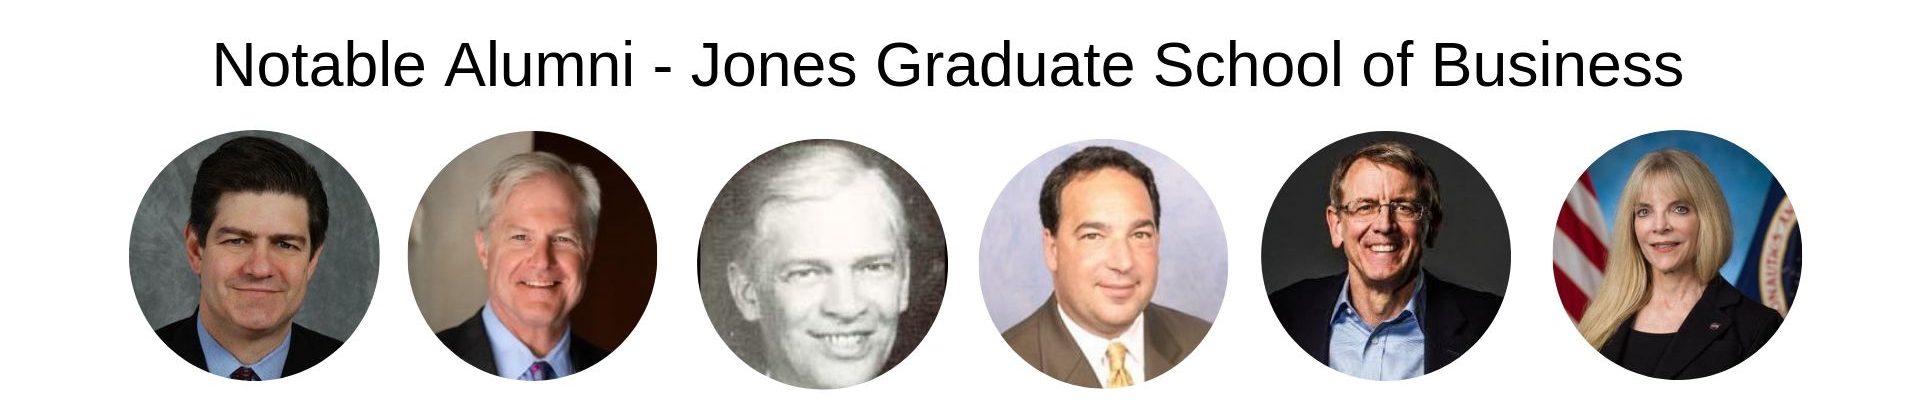 Rice University - Jones Graduate School of Business - Notable Alumni - Rice MBA Program